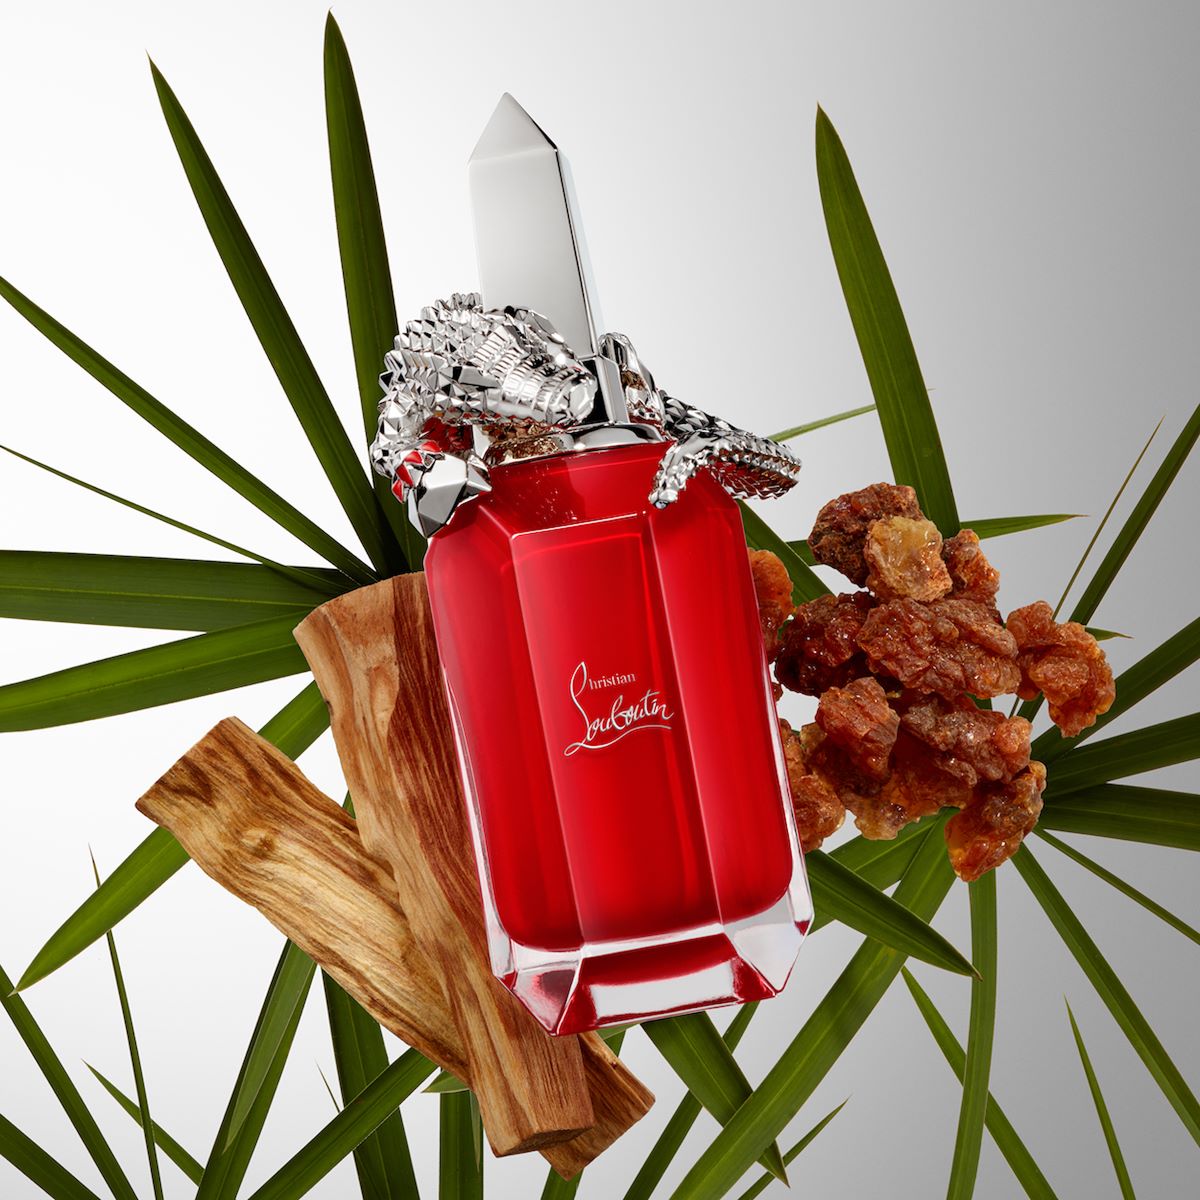 Loubicroc Christian Louboutin Perfume — SHAY BEN IZHACK FASHION ILLUSTRATOR